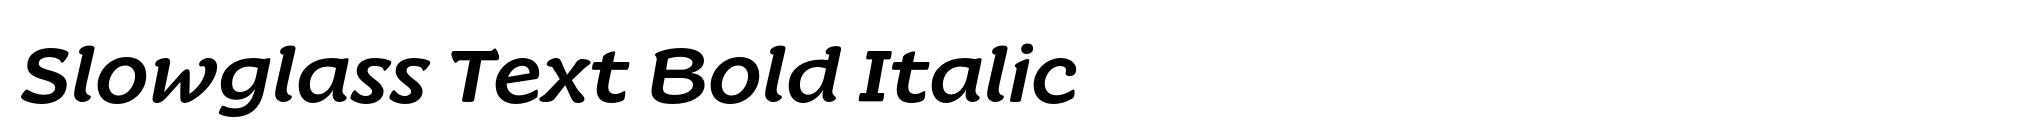 Slowglass Text Bold Italic image